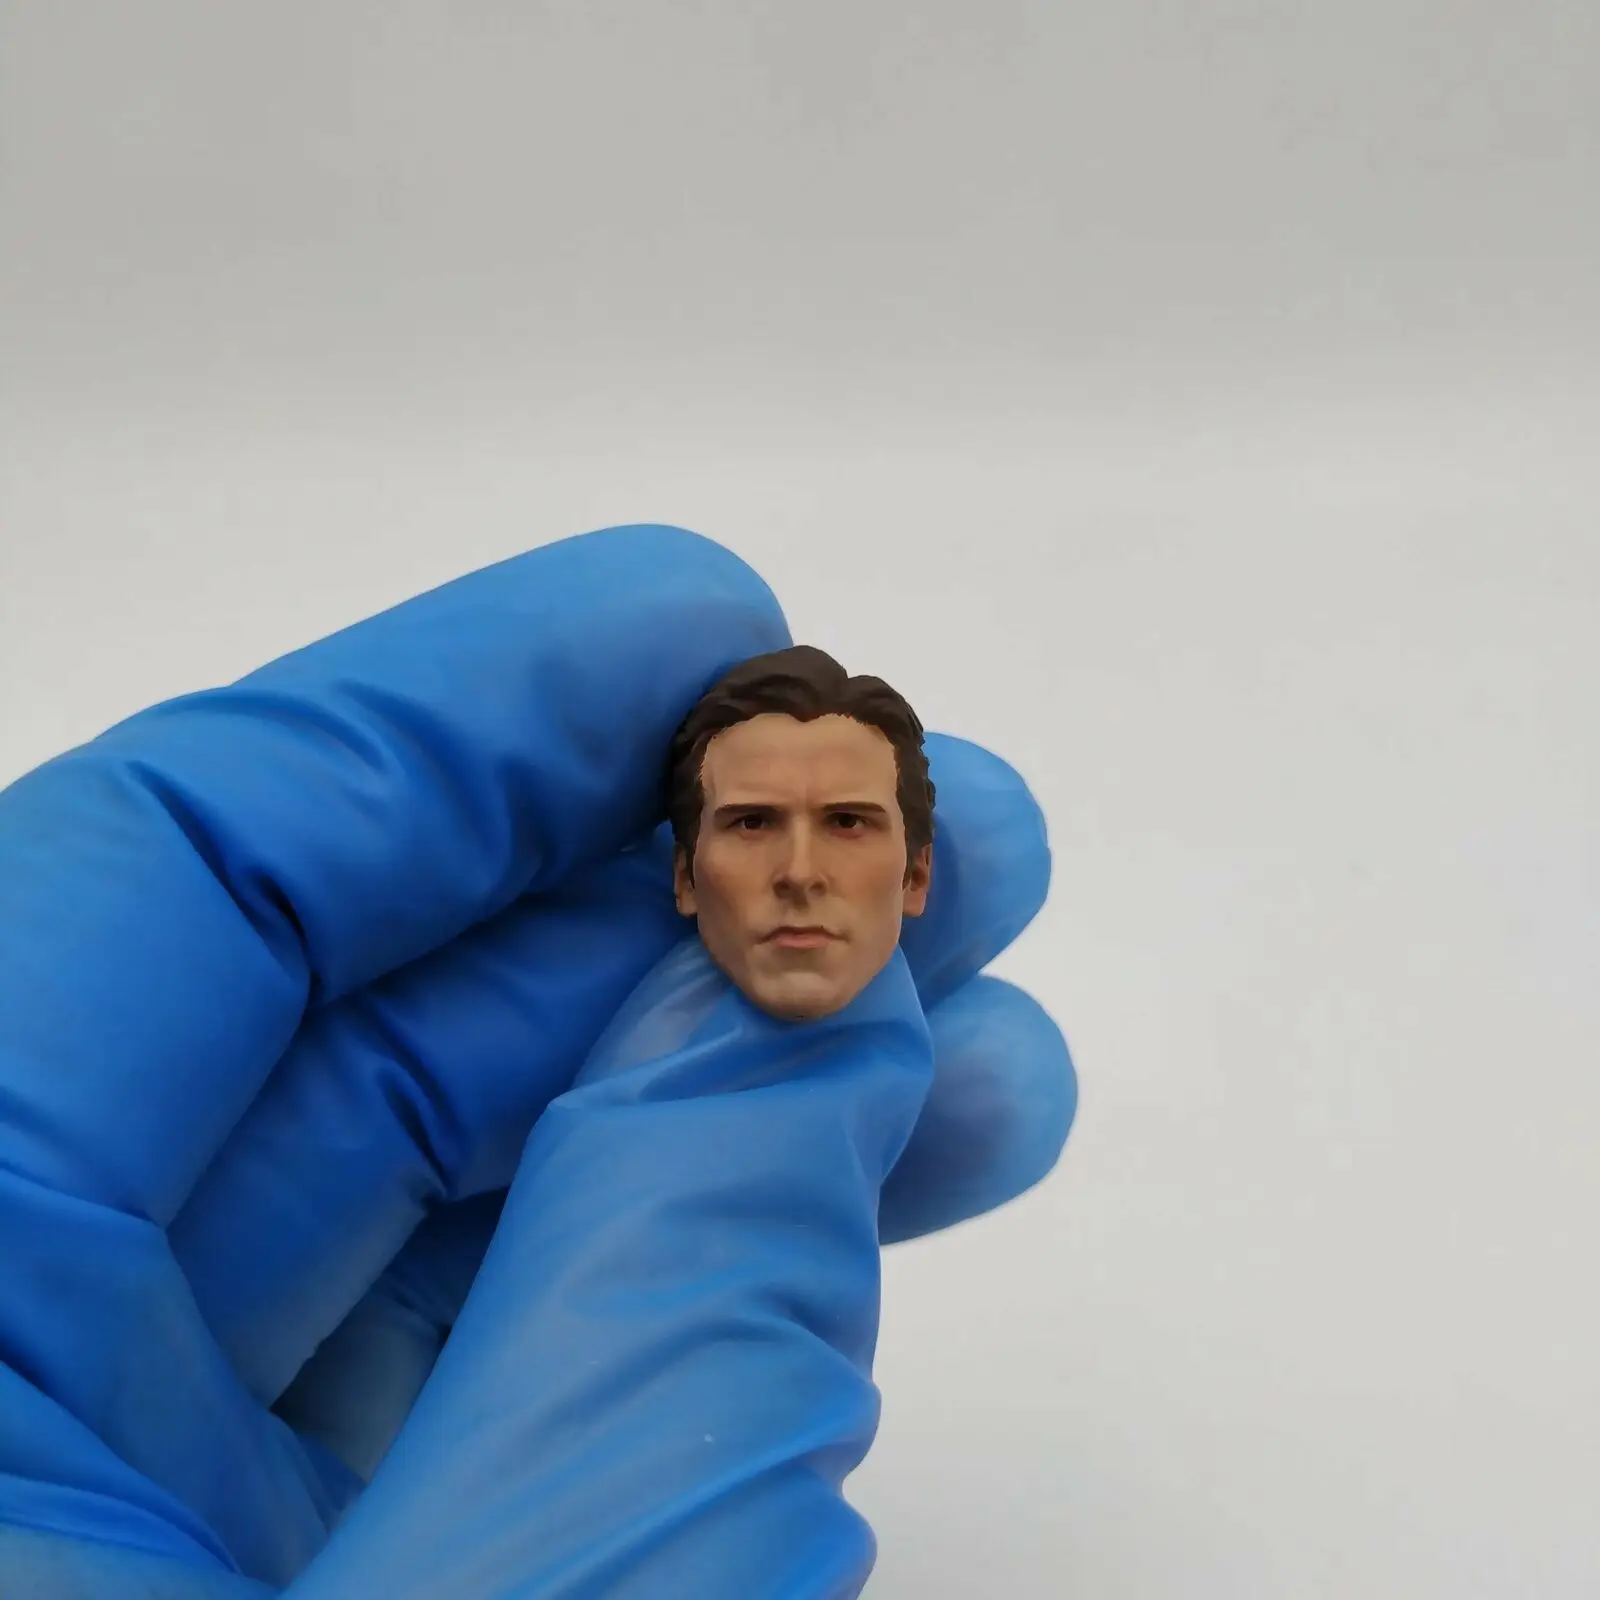 

Tbleague 1/12 Scale Christian Bale Head Sculpt Handpainted for 6" SHF Mafex Action Figure Toys